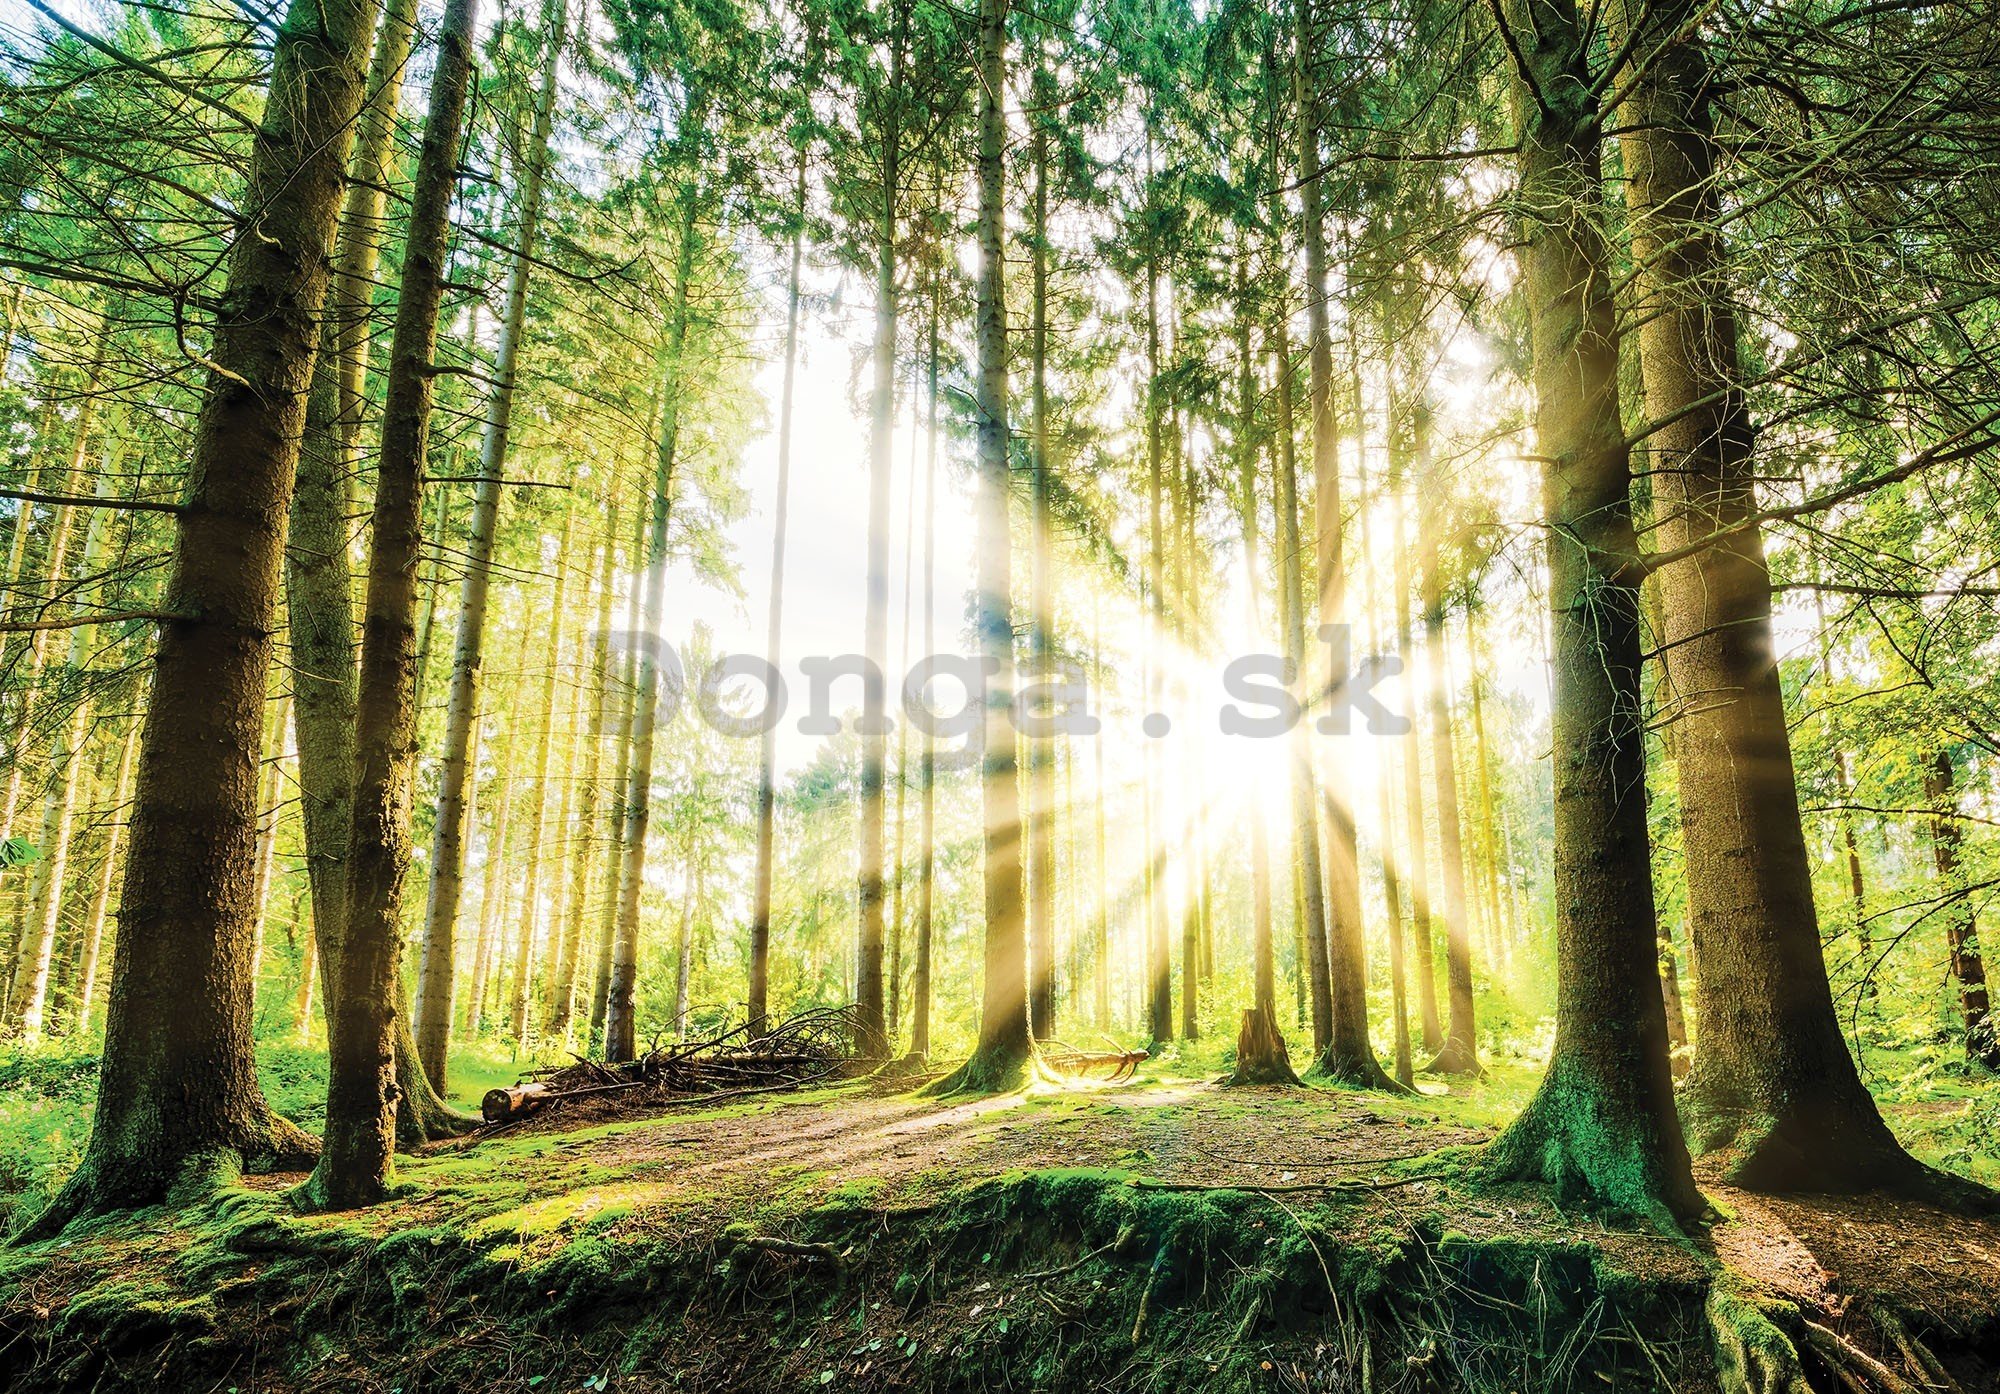 Fototapeta vliesová: Slnko v lese (2) - 416x254 cm